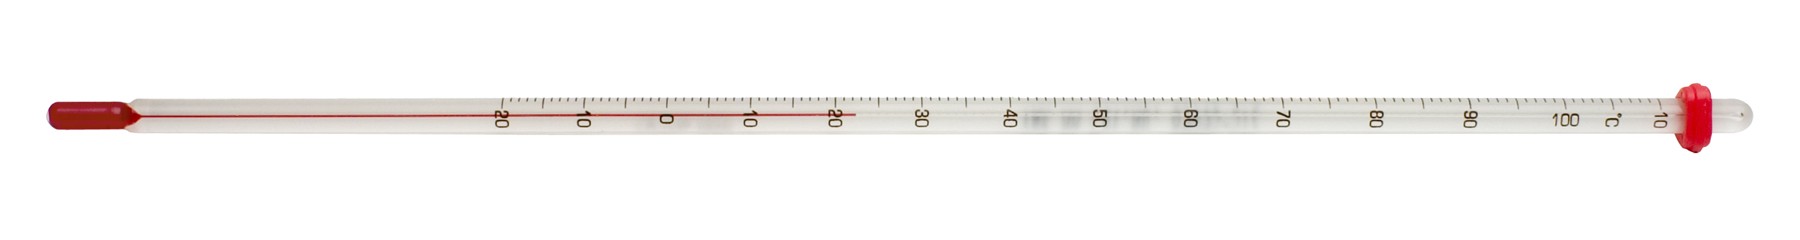 SP Bel-Art, H-B DURAC General Purpose Liquid-In-Glass Laboratory Thermometer; -20 to 110C, Total Immersion, Organic Liquid Fill